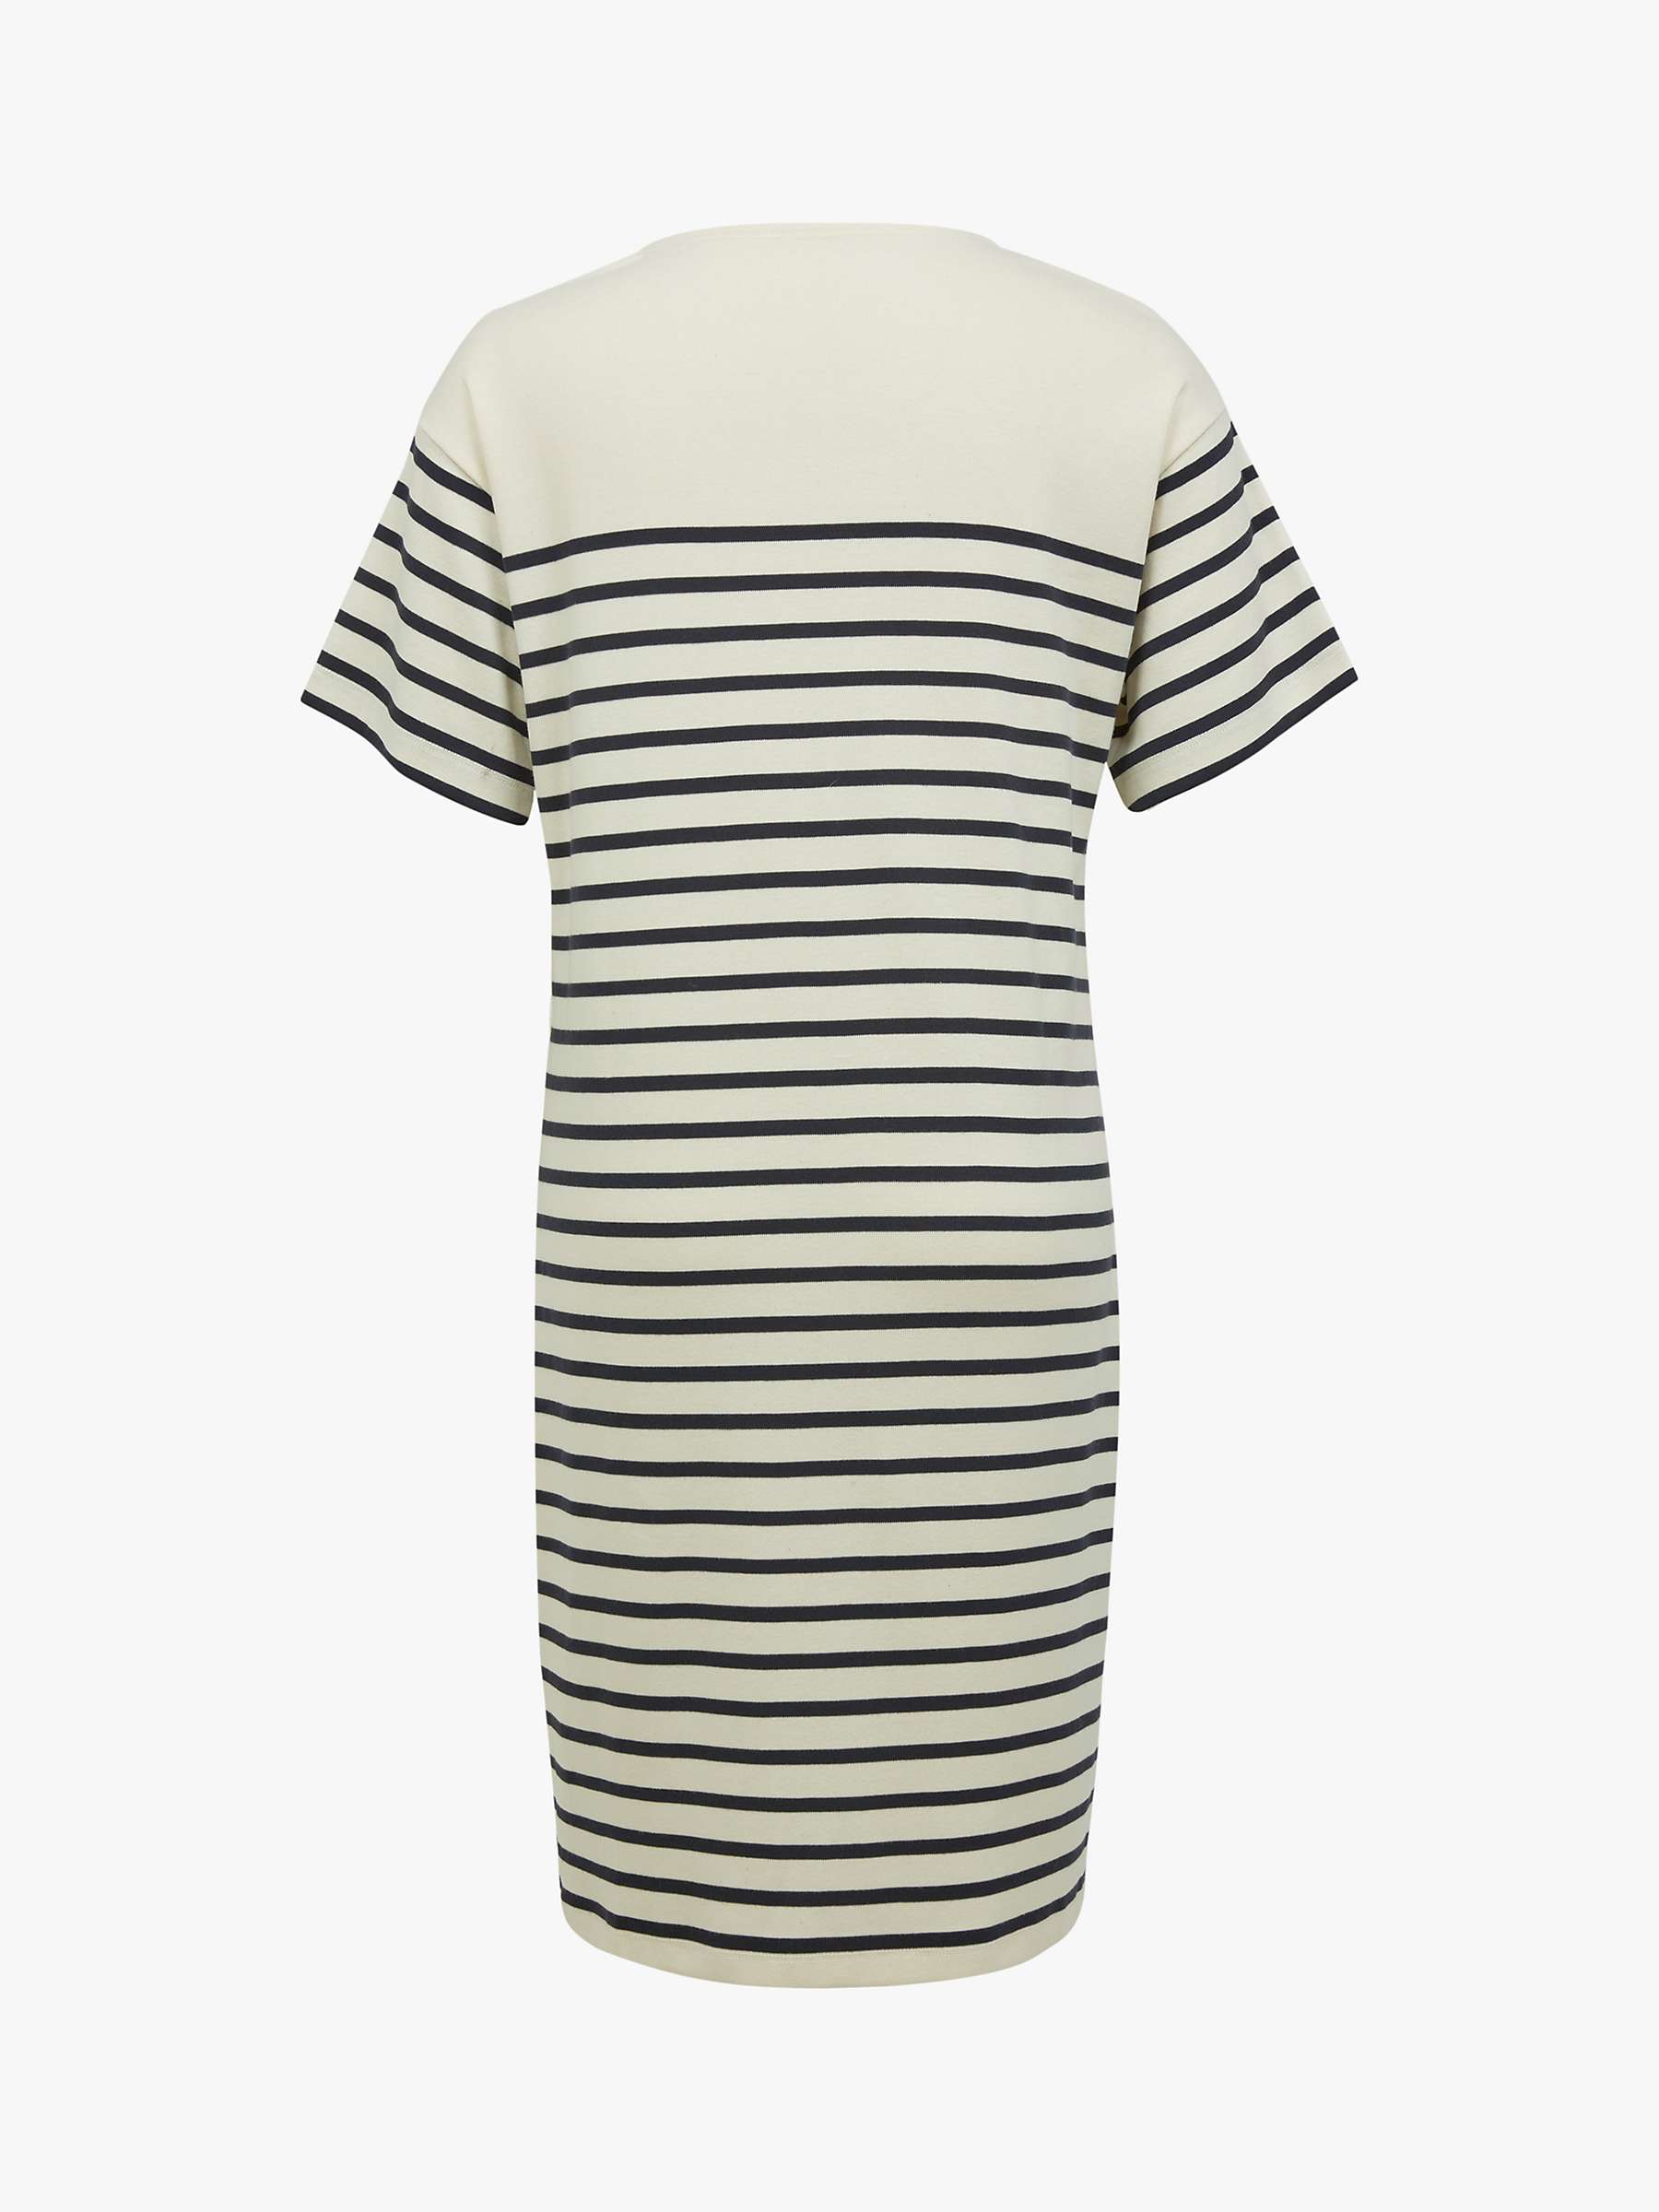 Buy Celtic & Co. Striped T-Shirt Dress, Ecru/Navy Online at johnlewis.com